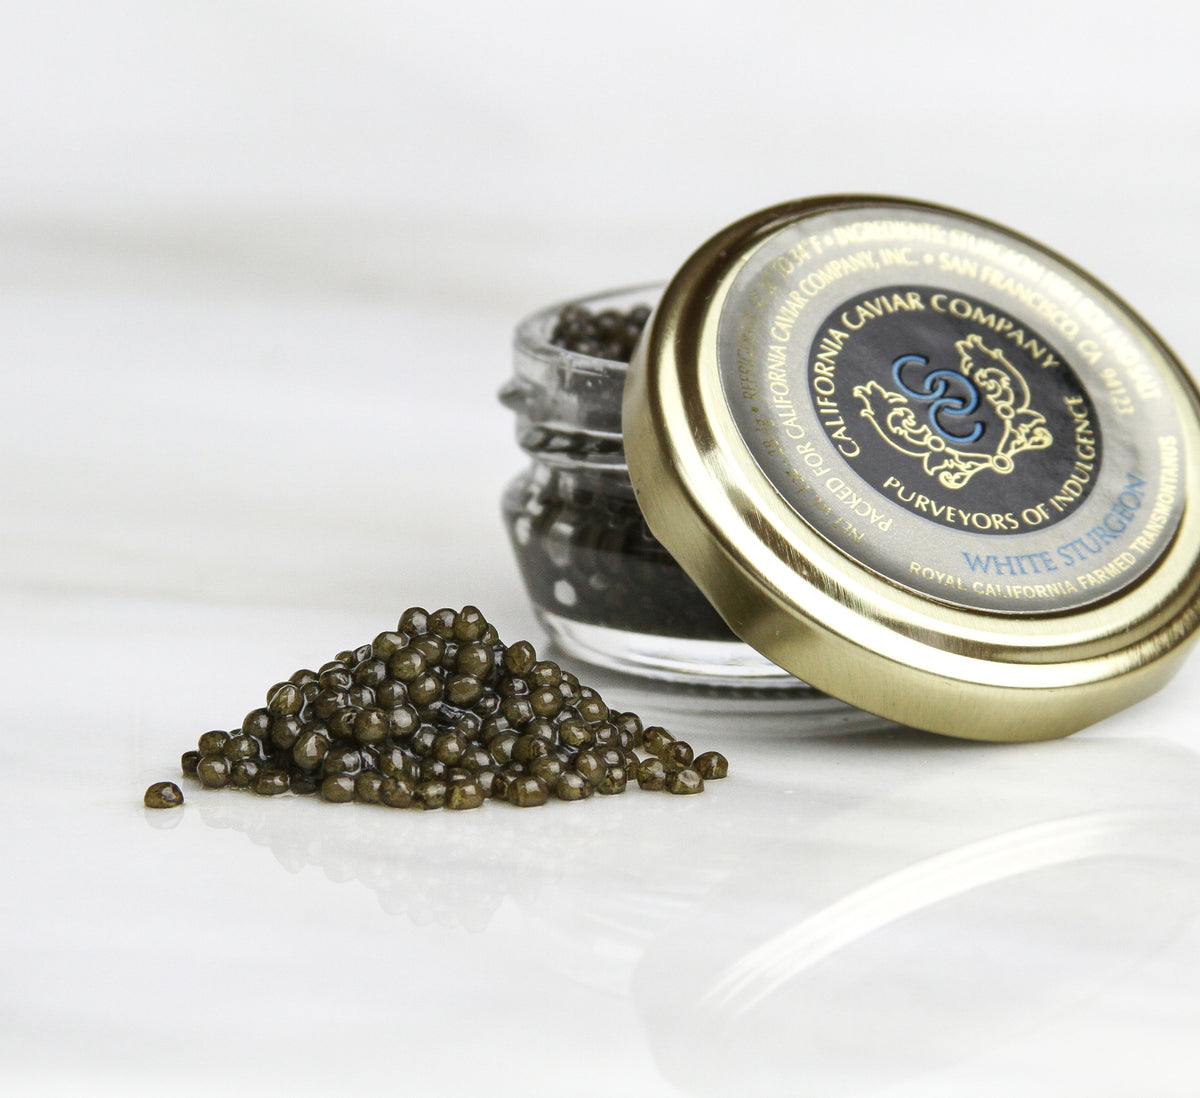 White Sturgeon Caviar: Luxurious Indulgence: White Sturgeon Caviar